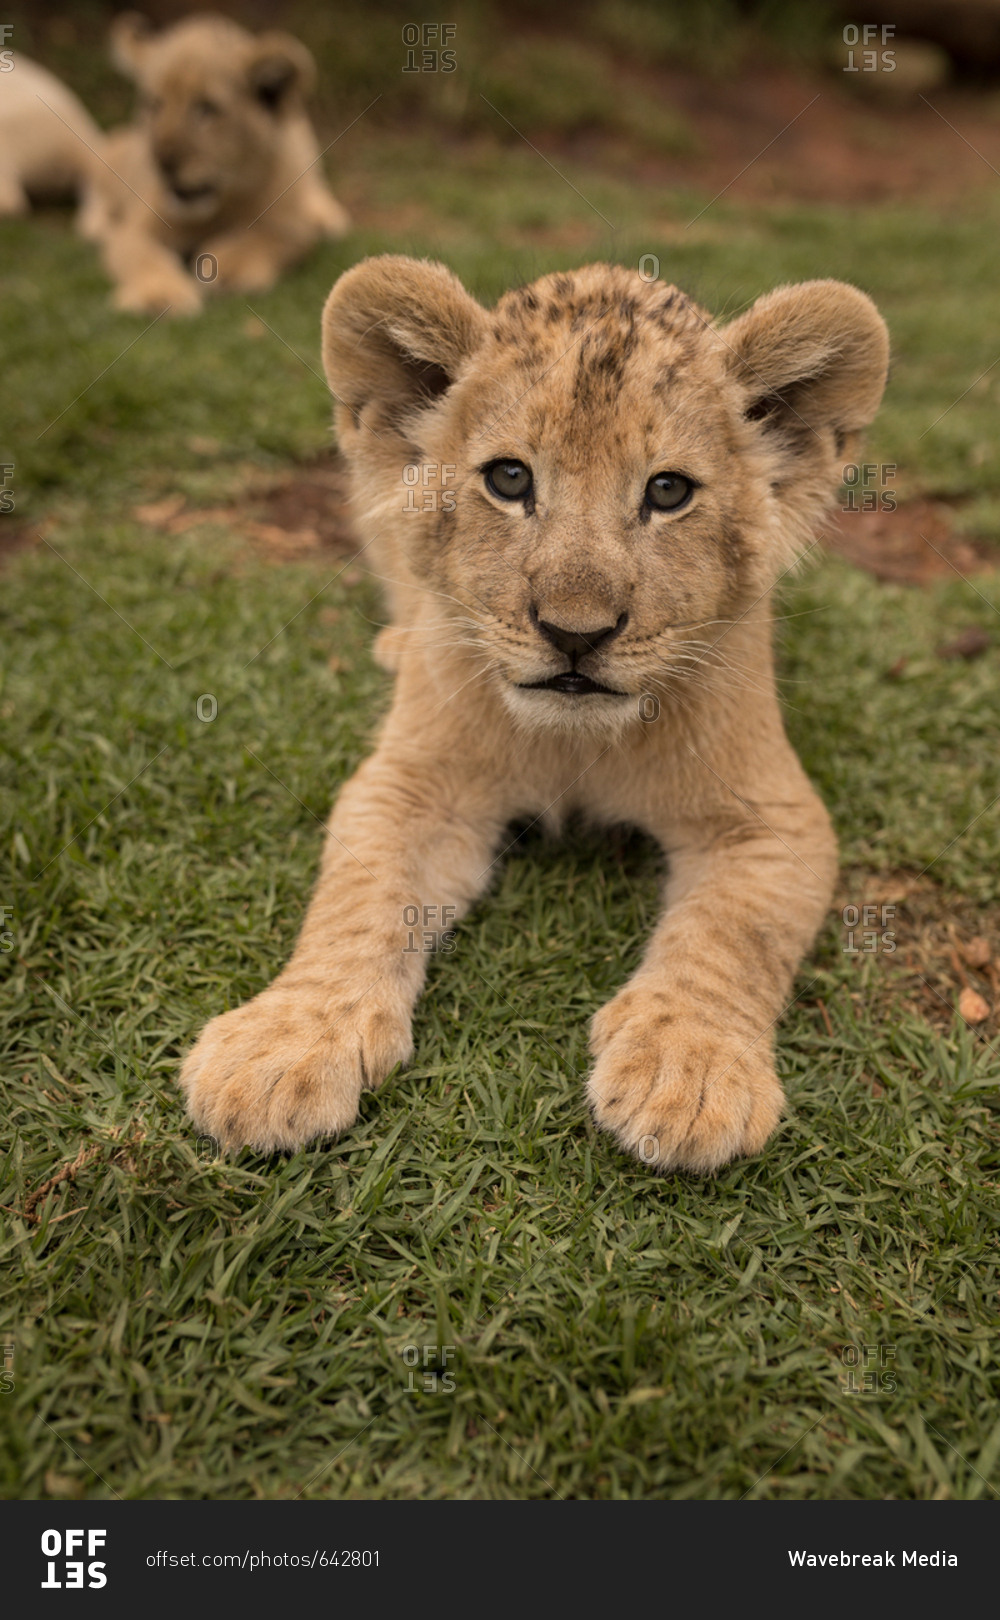 Lion cubs relaxing on grass at safari park